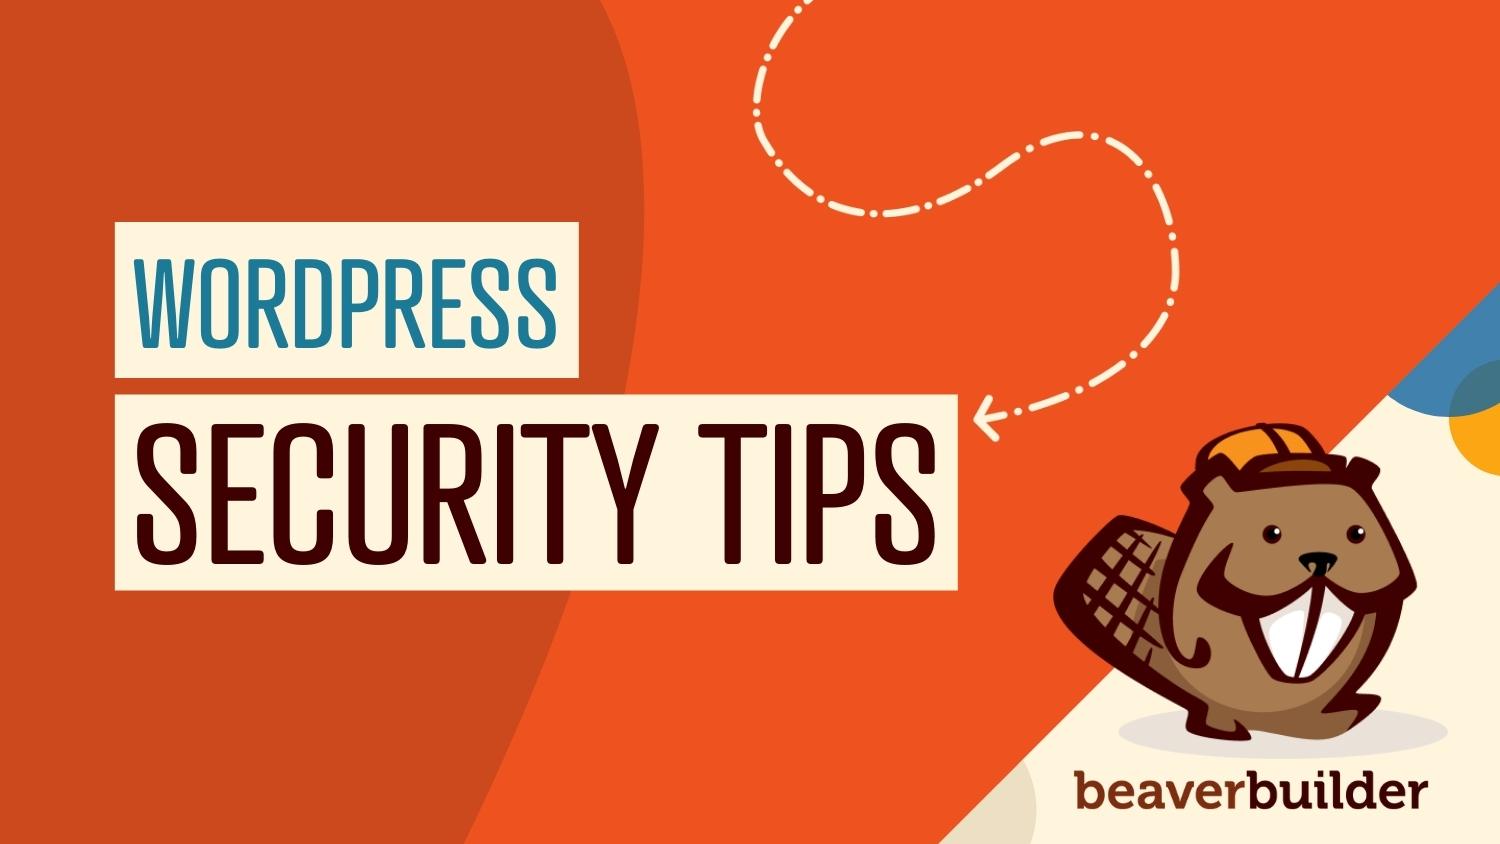 5 WordPress security tips for beginners | Beaver Builder blog